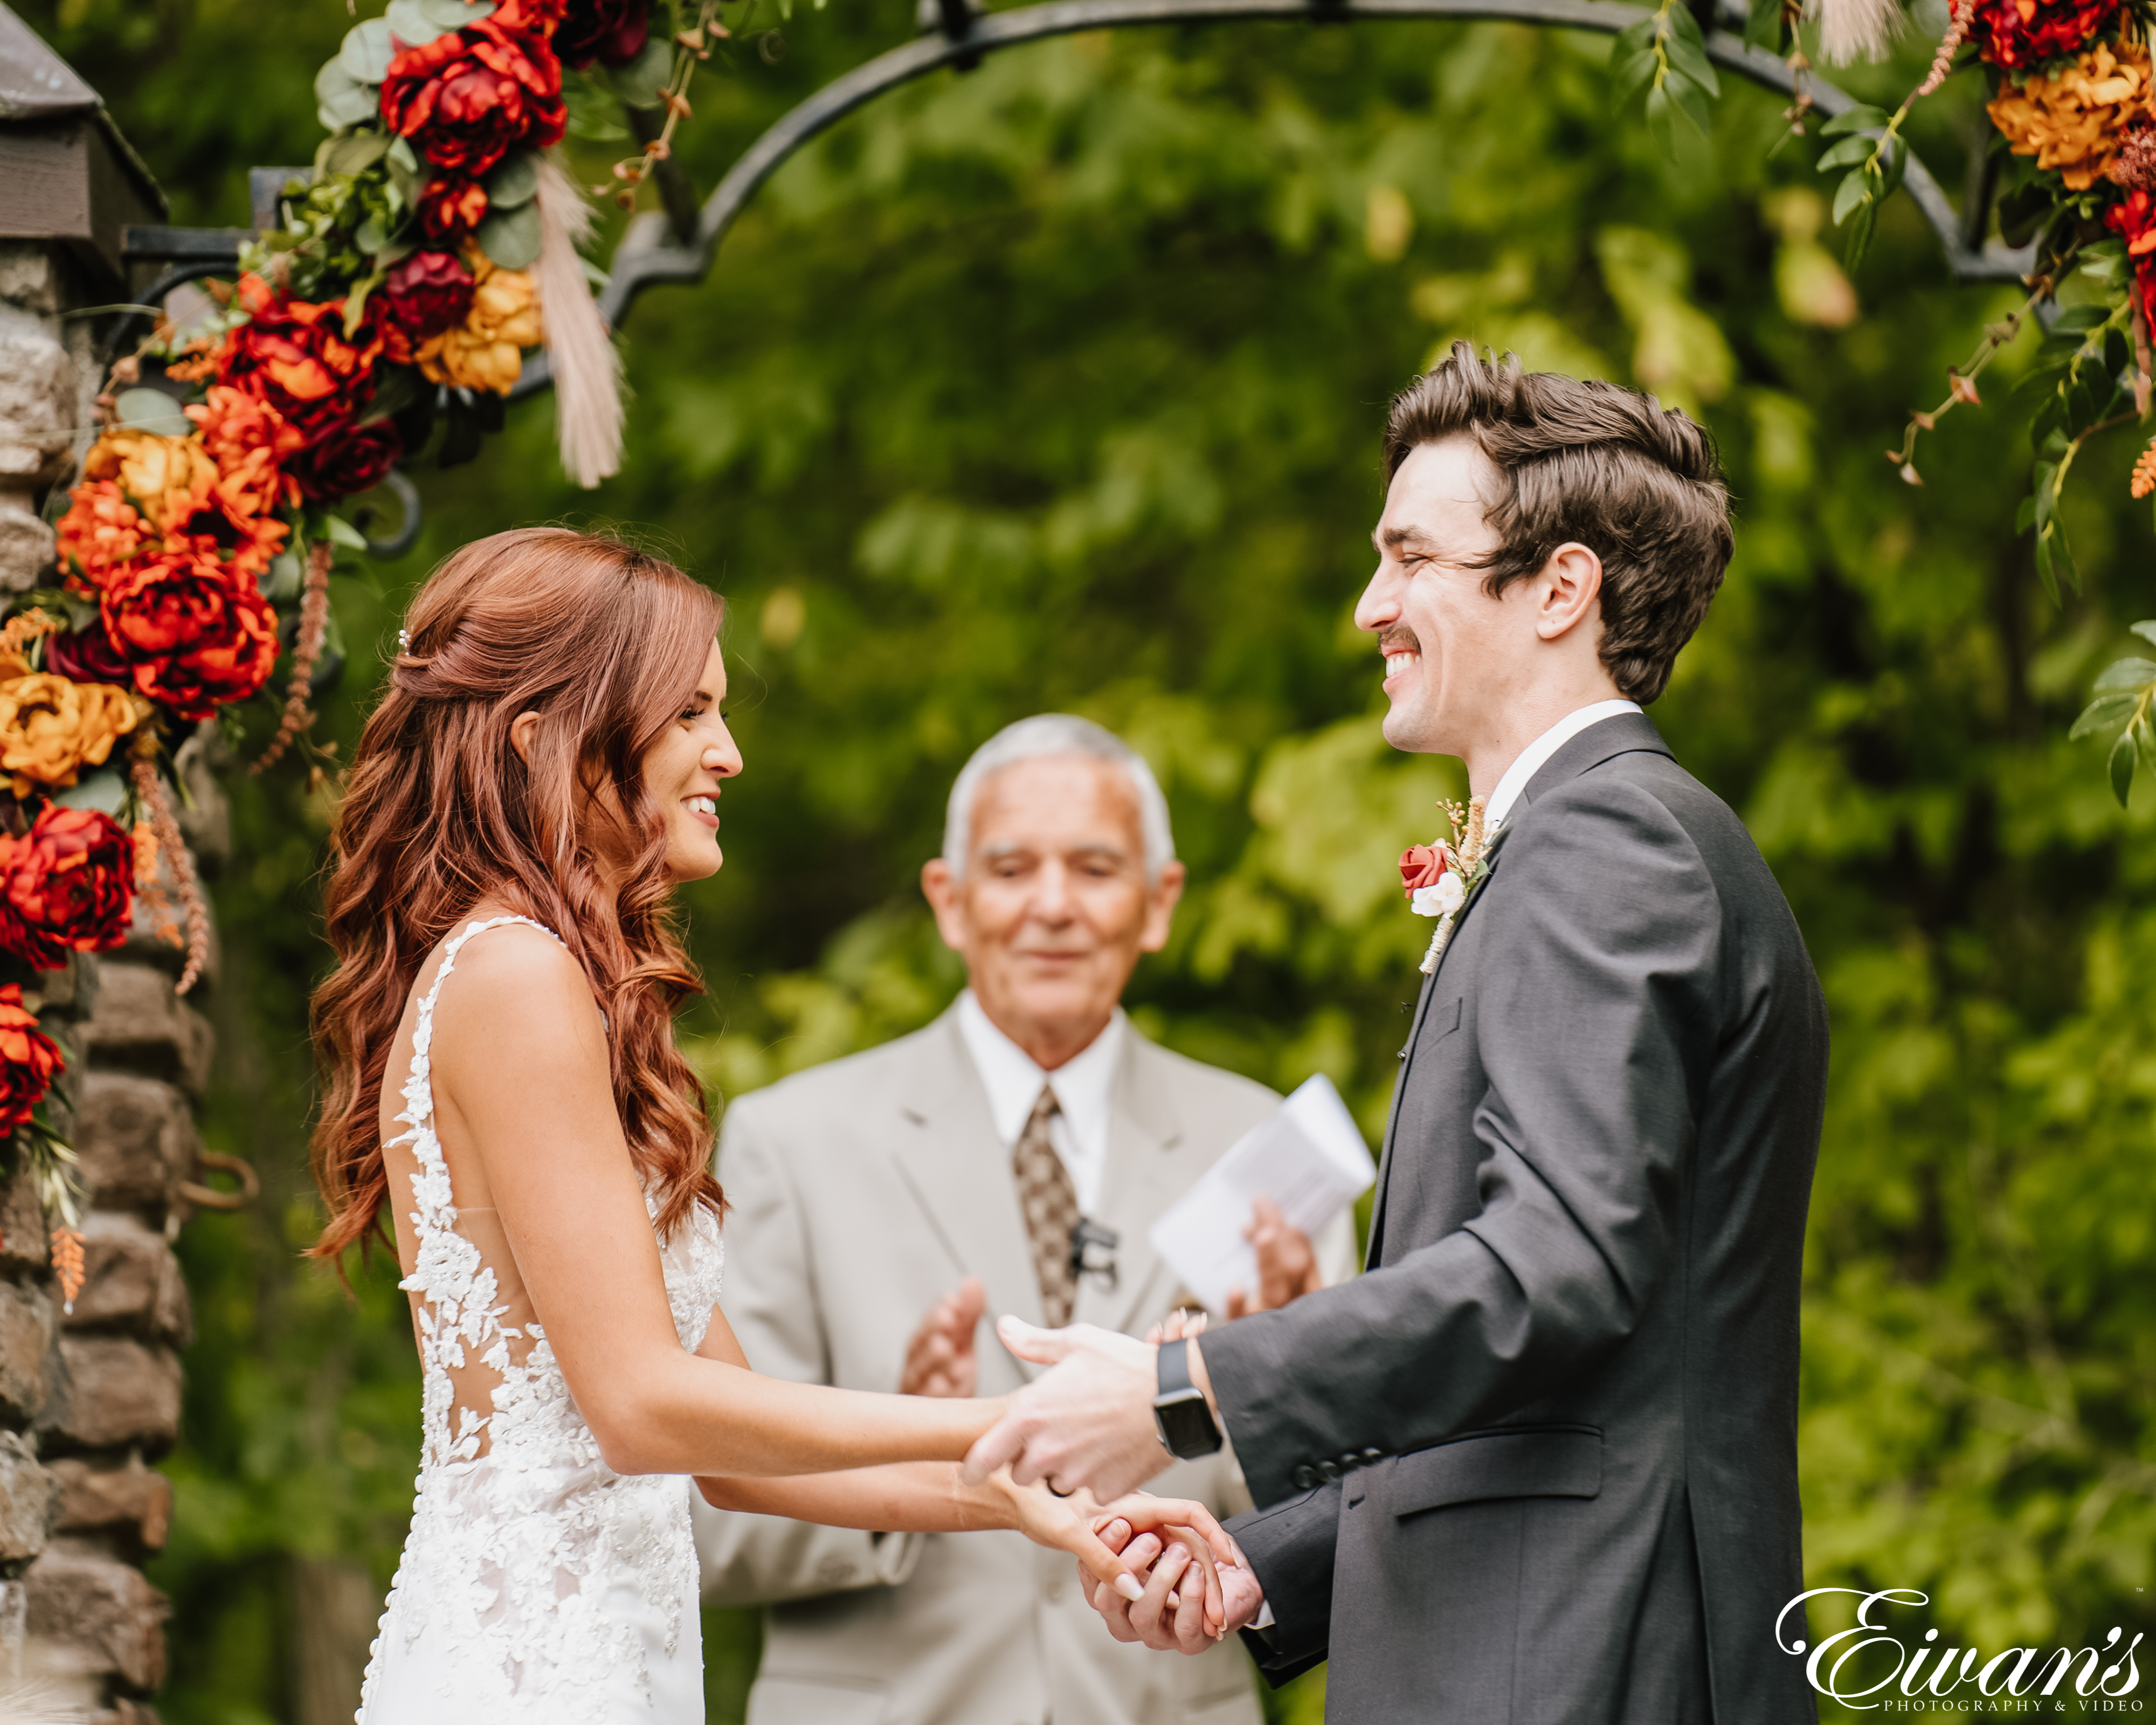 Ask The Experts: How to Create the Perfect Boho Wedding - Boho Wedding Blog